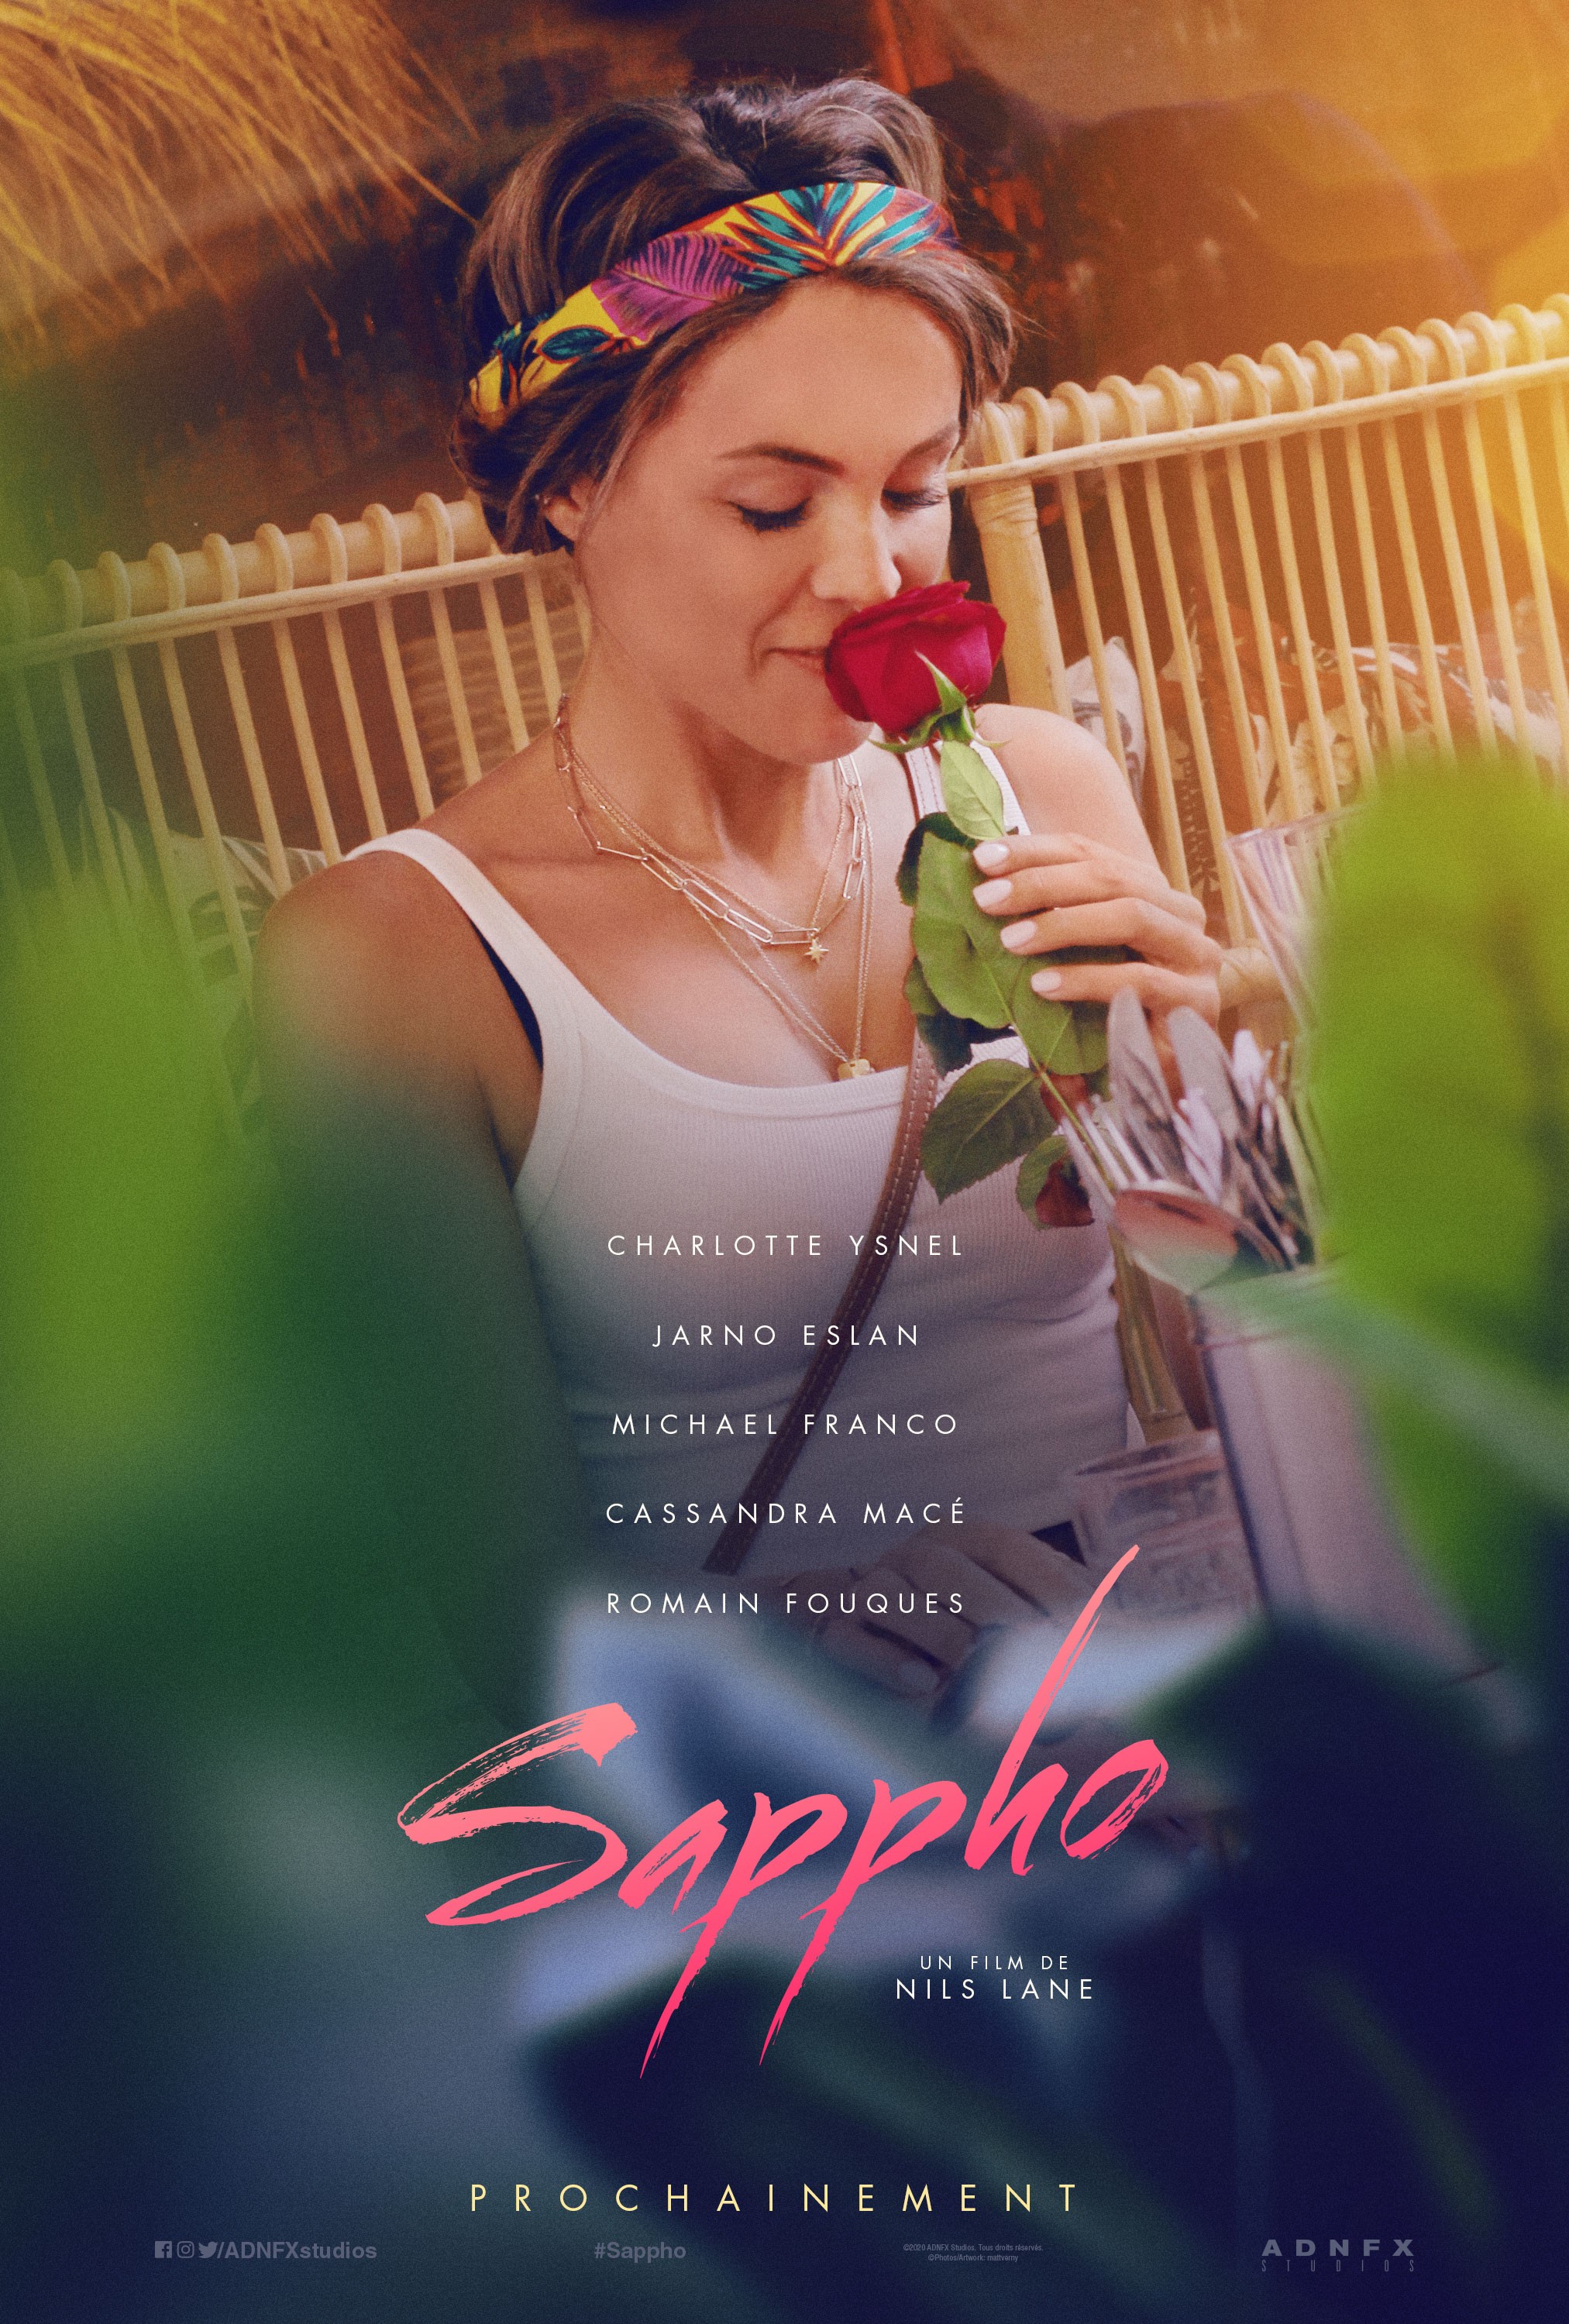 Mega Sized Movie Poster Image for Sappho